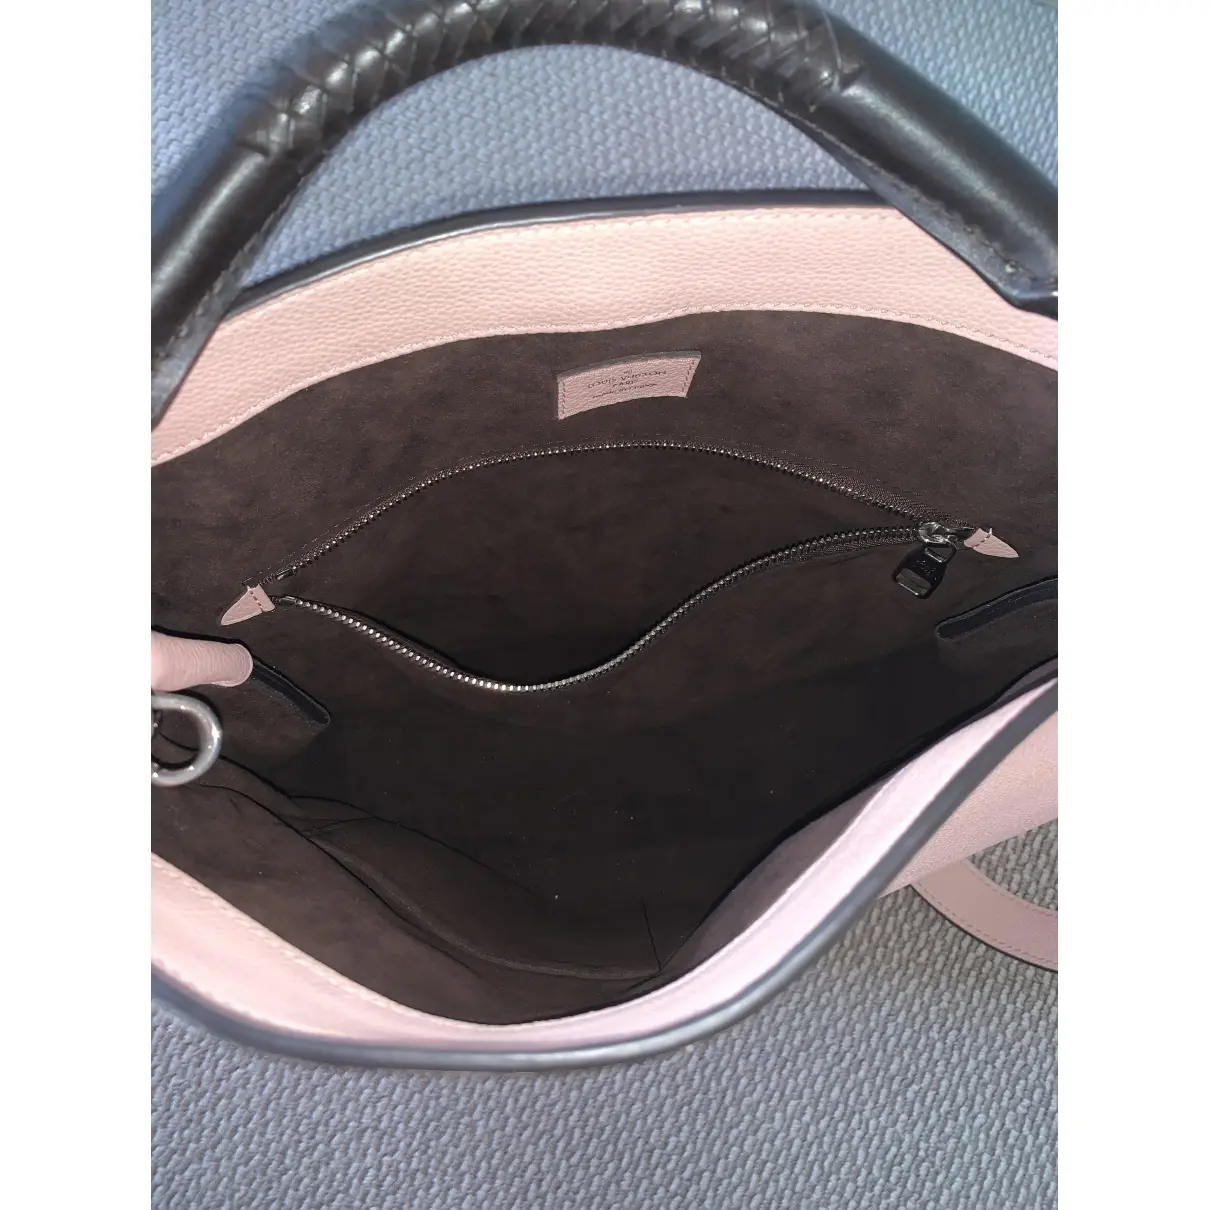 Buy Louis Vuitton Babylone leather handbag online